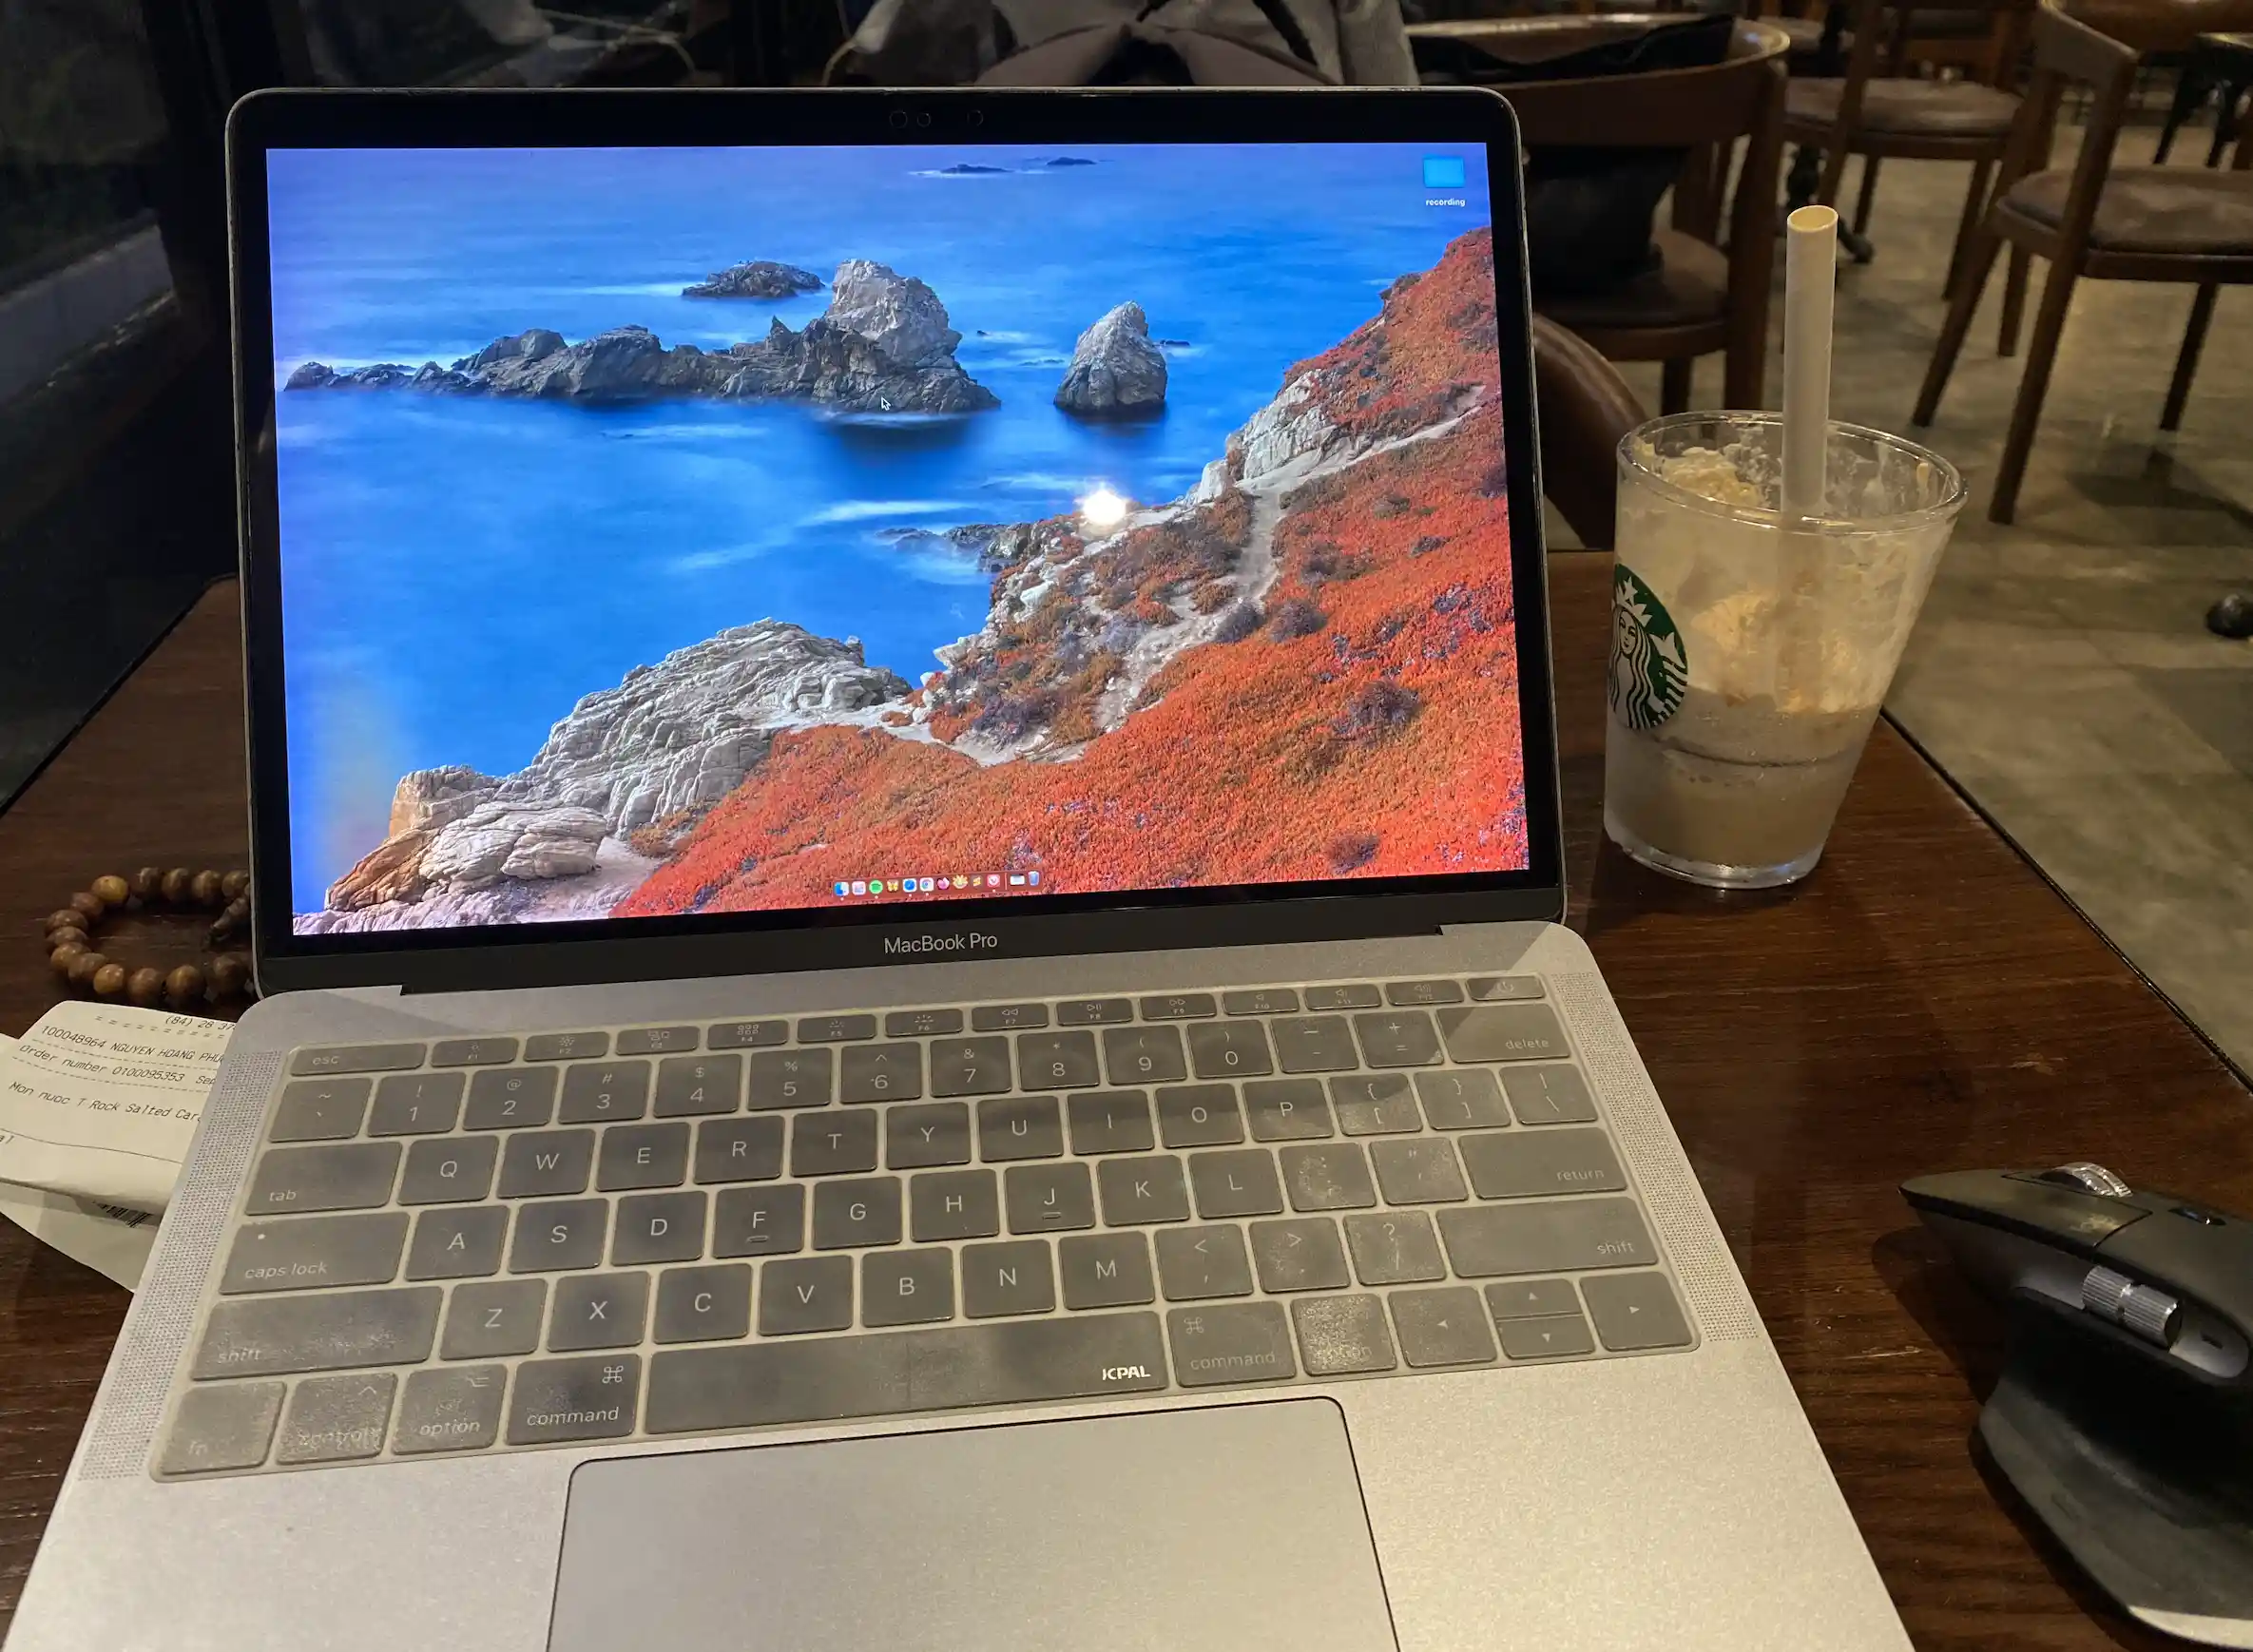 Free Wi-Fi at Starbucks